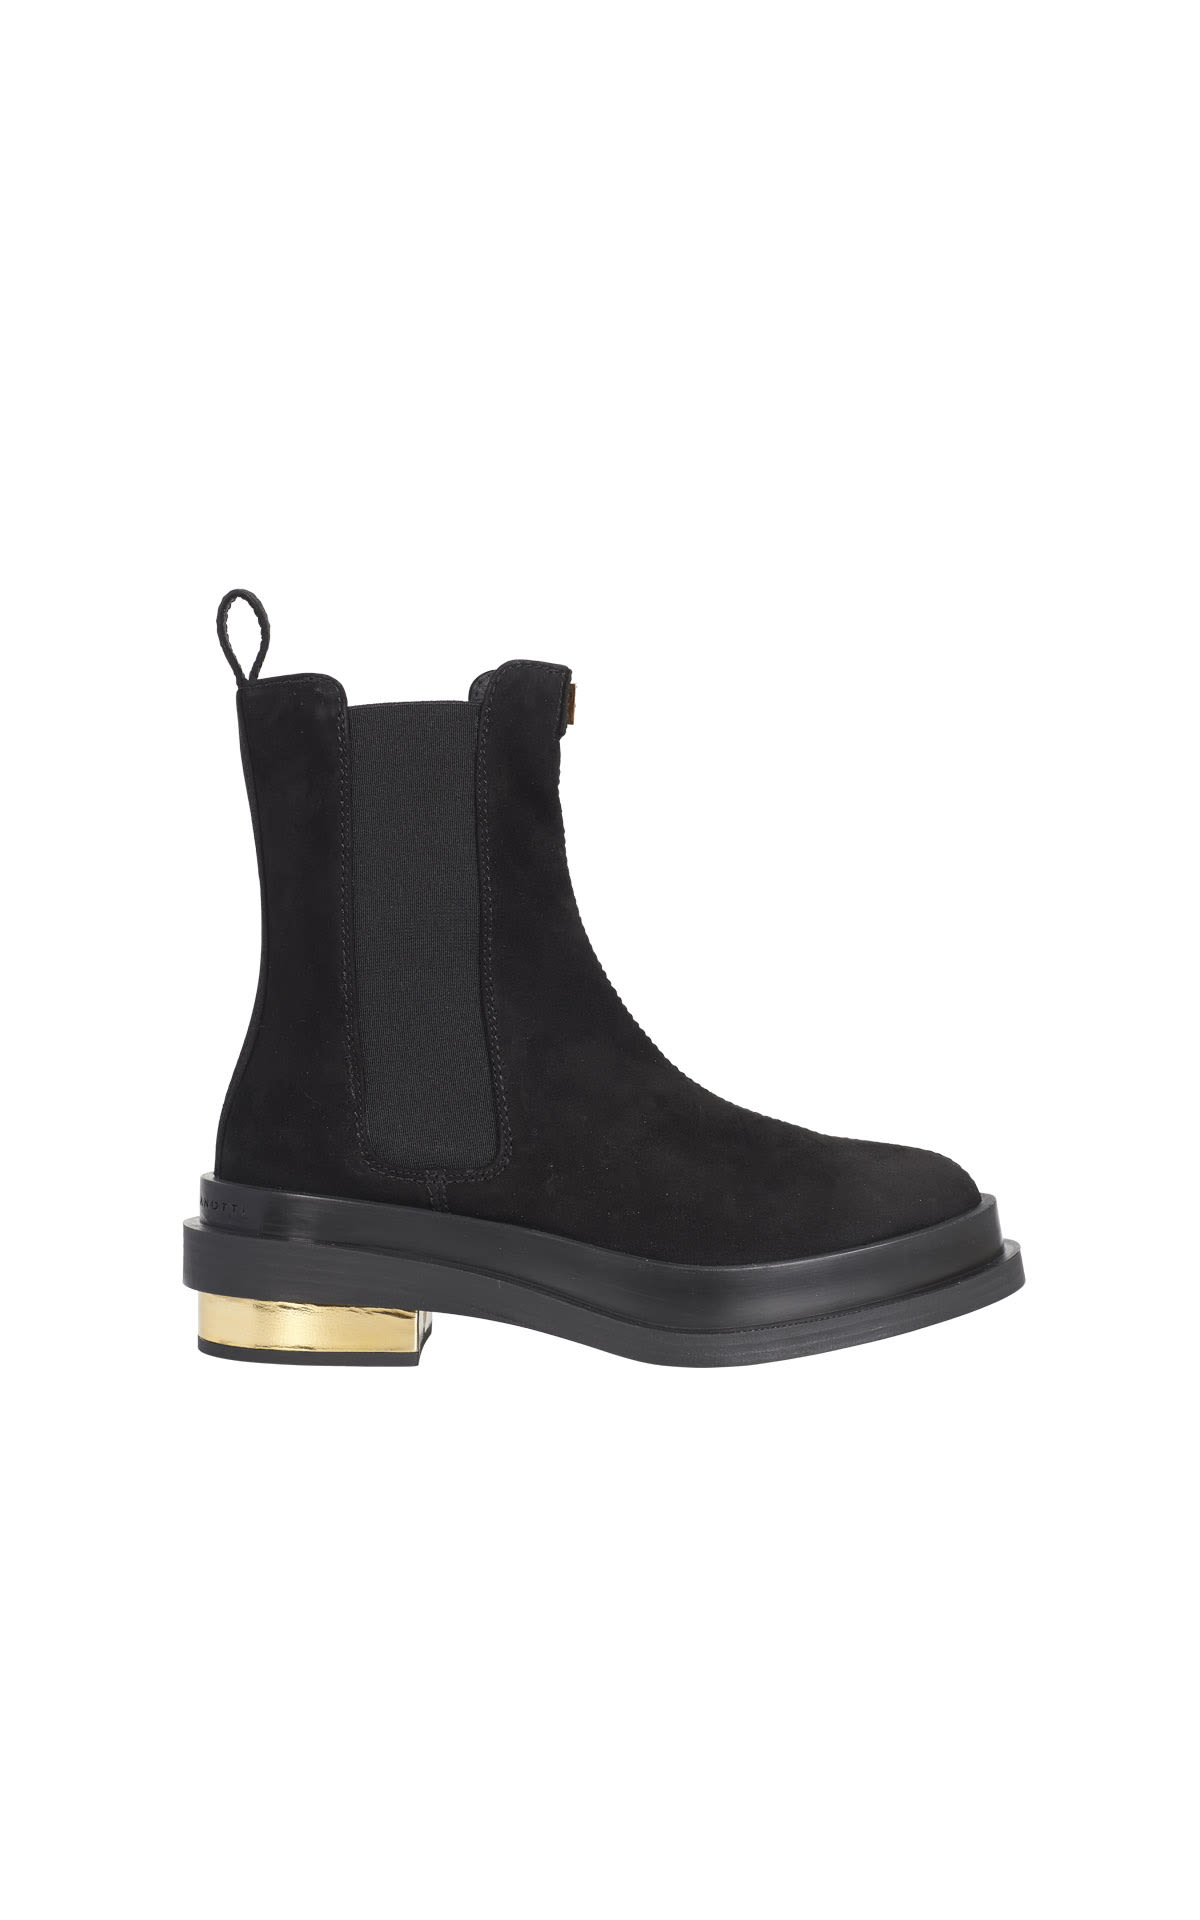 Black boot with gold heel Giuseppe zanotti